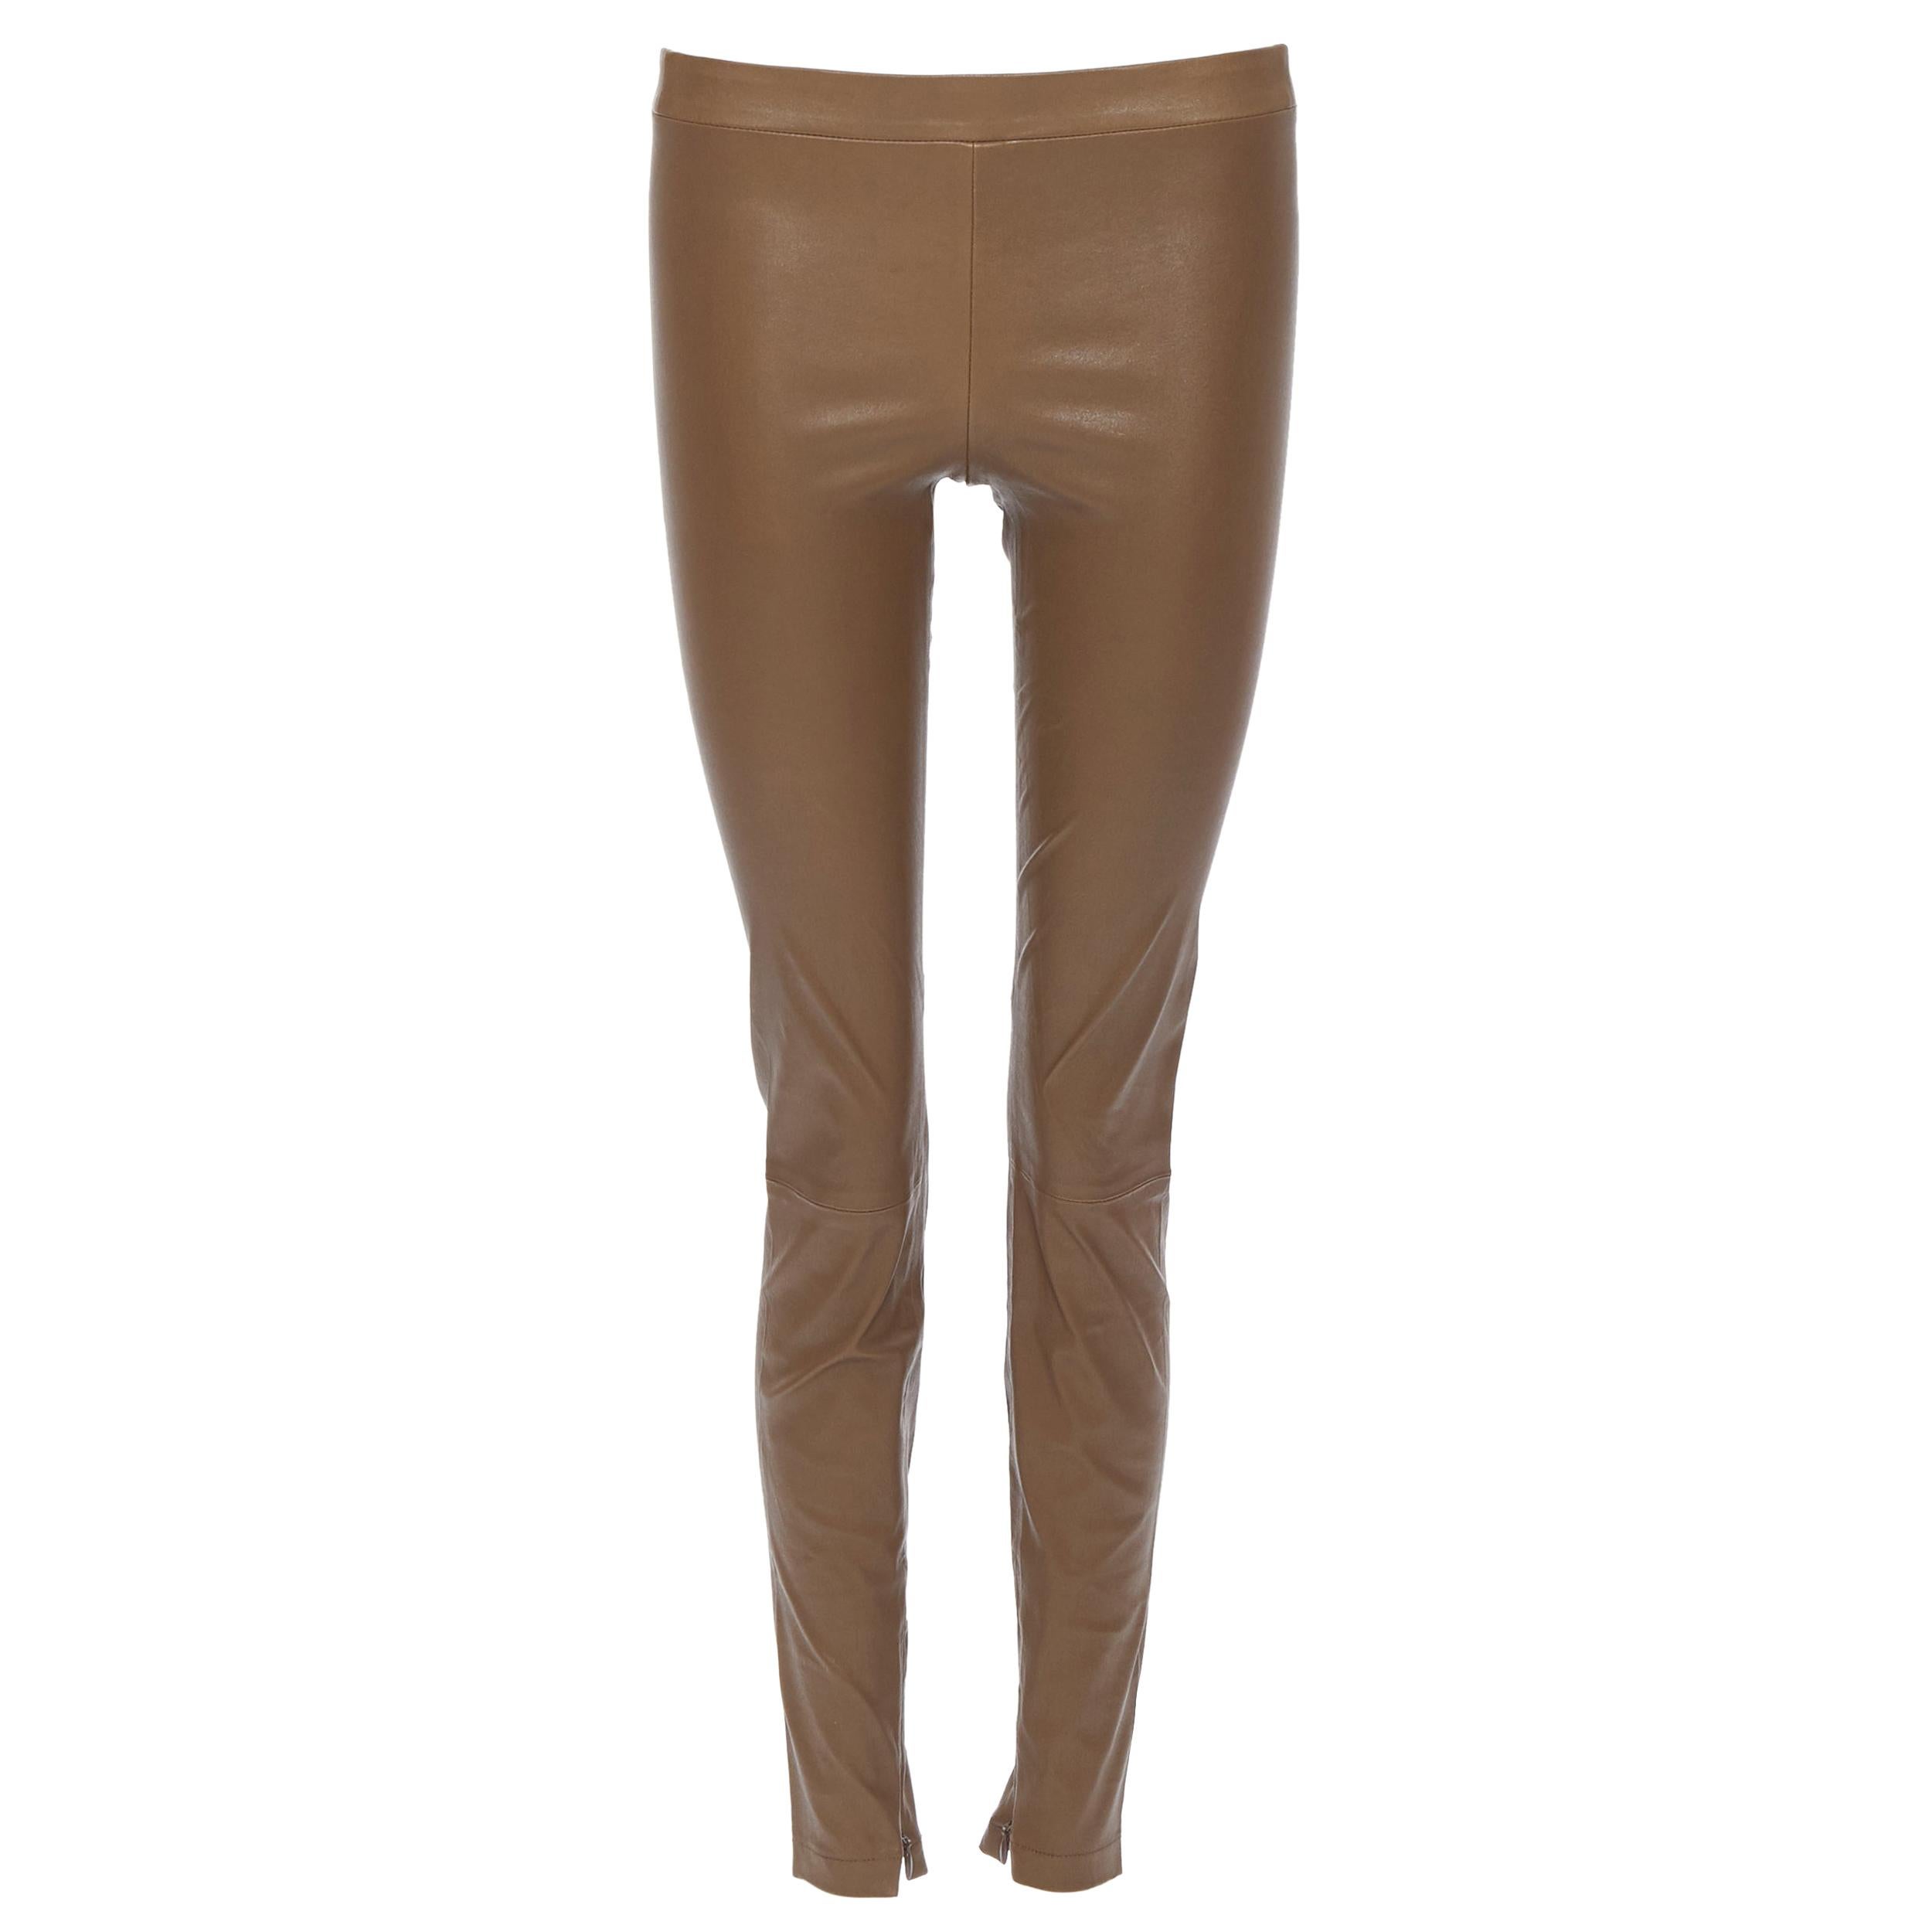 VINCE 100% leather tan brown minimal stretchy skinny leg pants XS